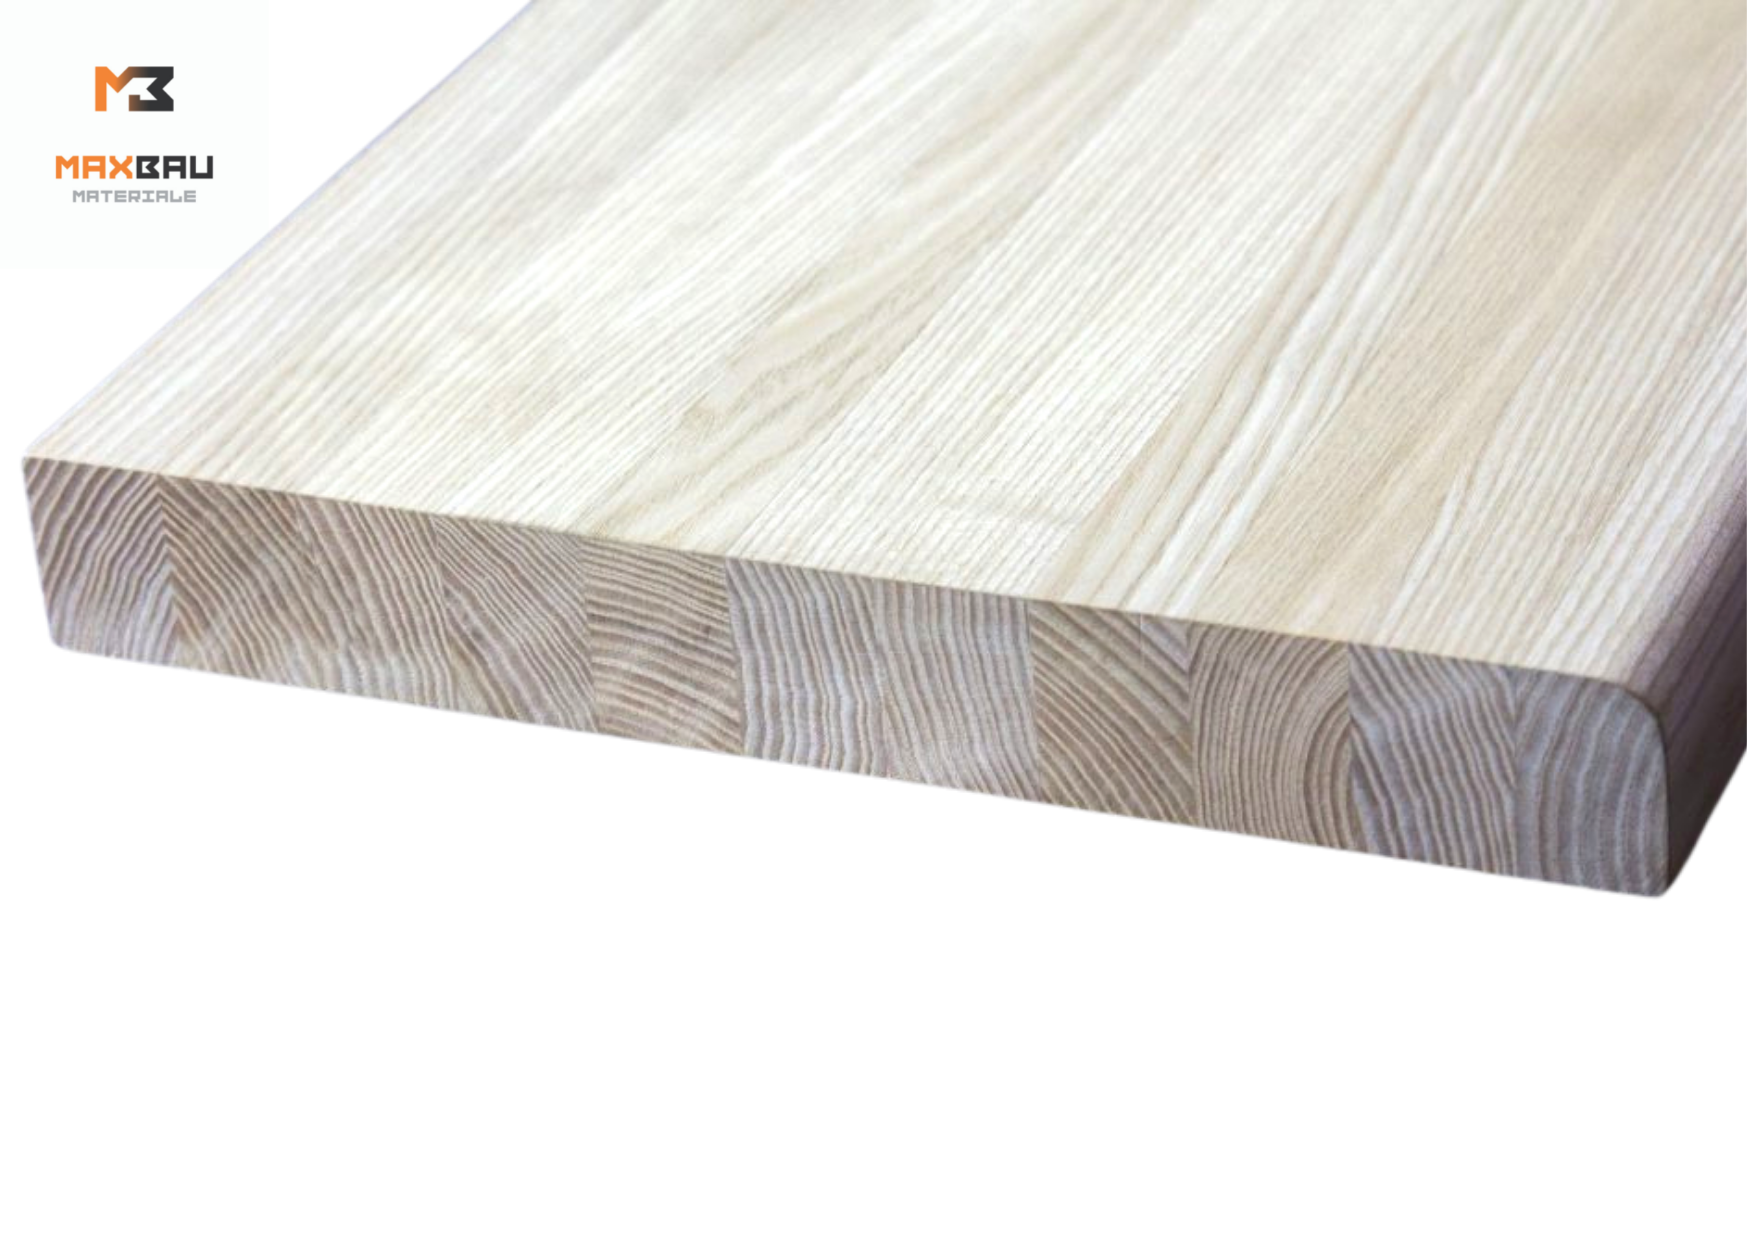 Placi din lemn incleiat - Placa de lemn incleiat MaxBau 2500 x 250 x 28 mm Clasa AB, maxbau.ro